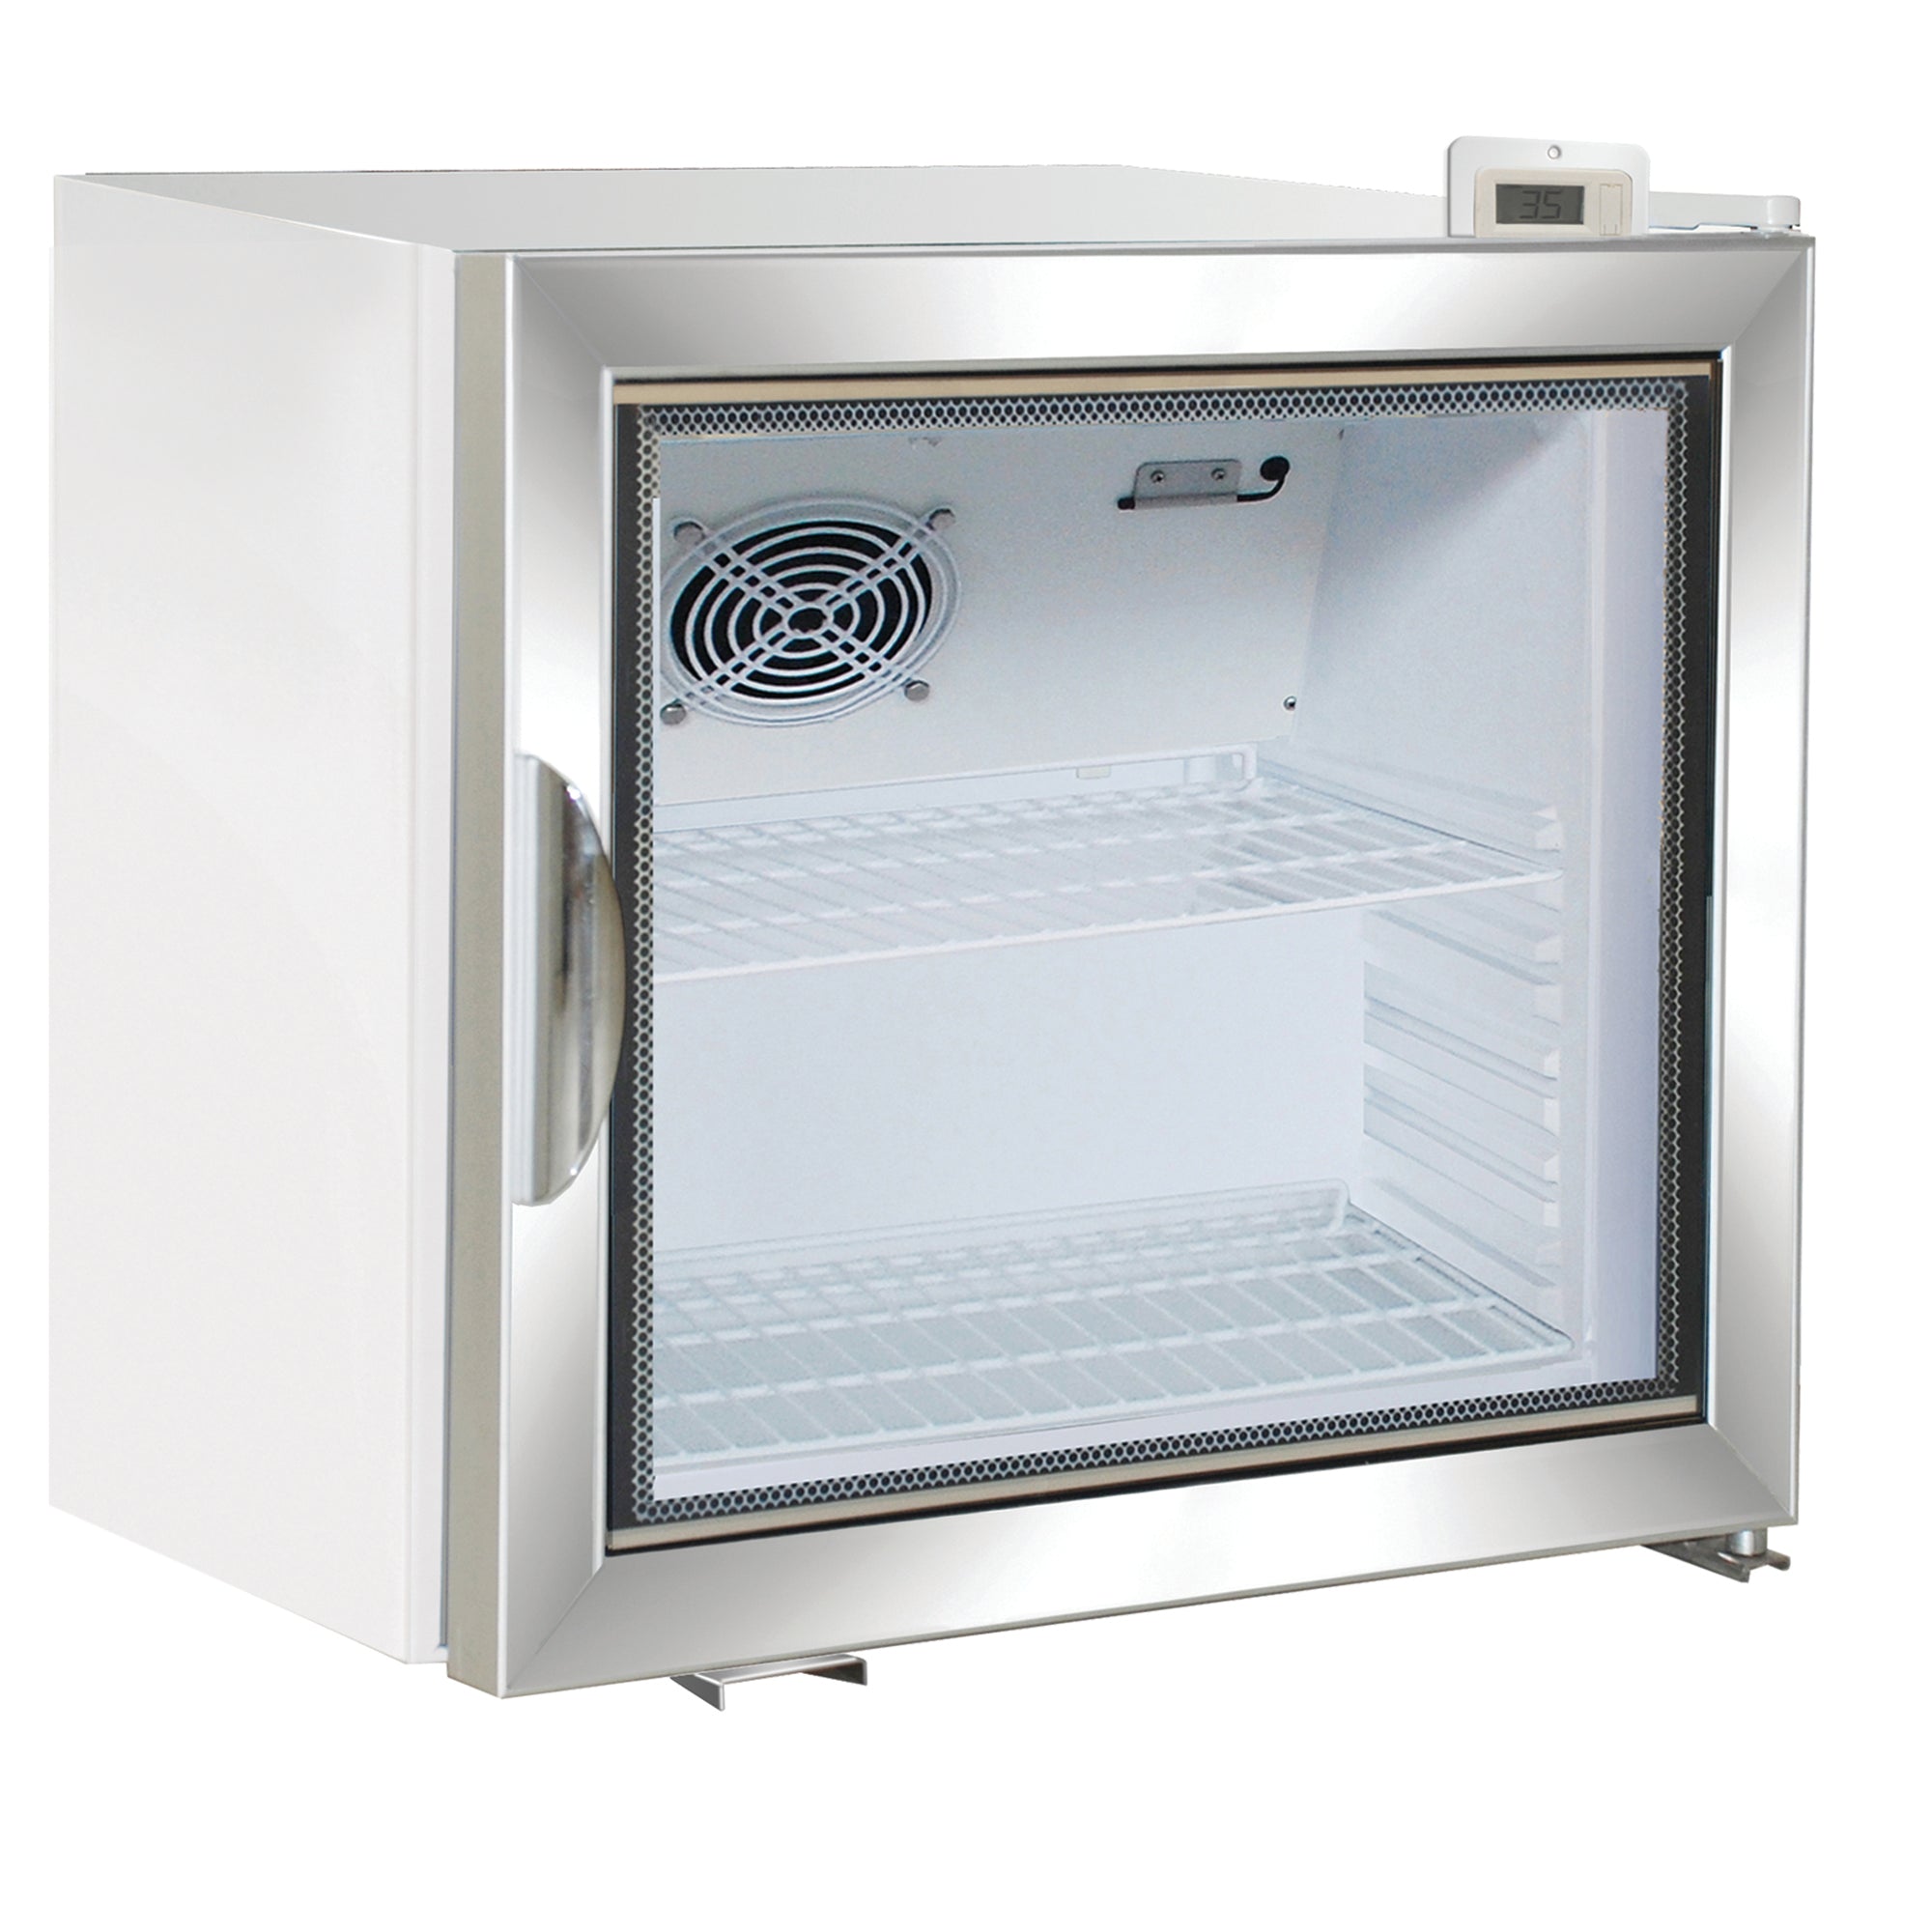 Maxx Cold - MXM1-2RHC, Maxx Cold Merchandiser Refrigerator, Countertop, 22.4"W, 2.1 cu. ft. Storage Capacity, in White